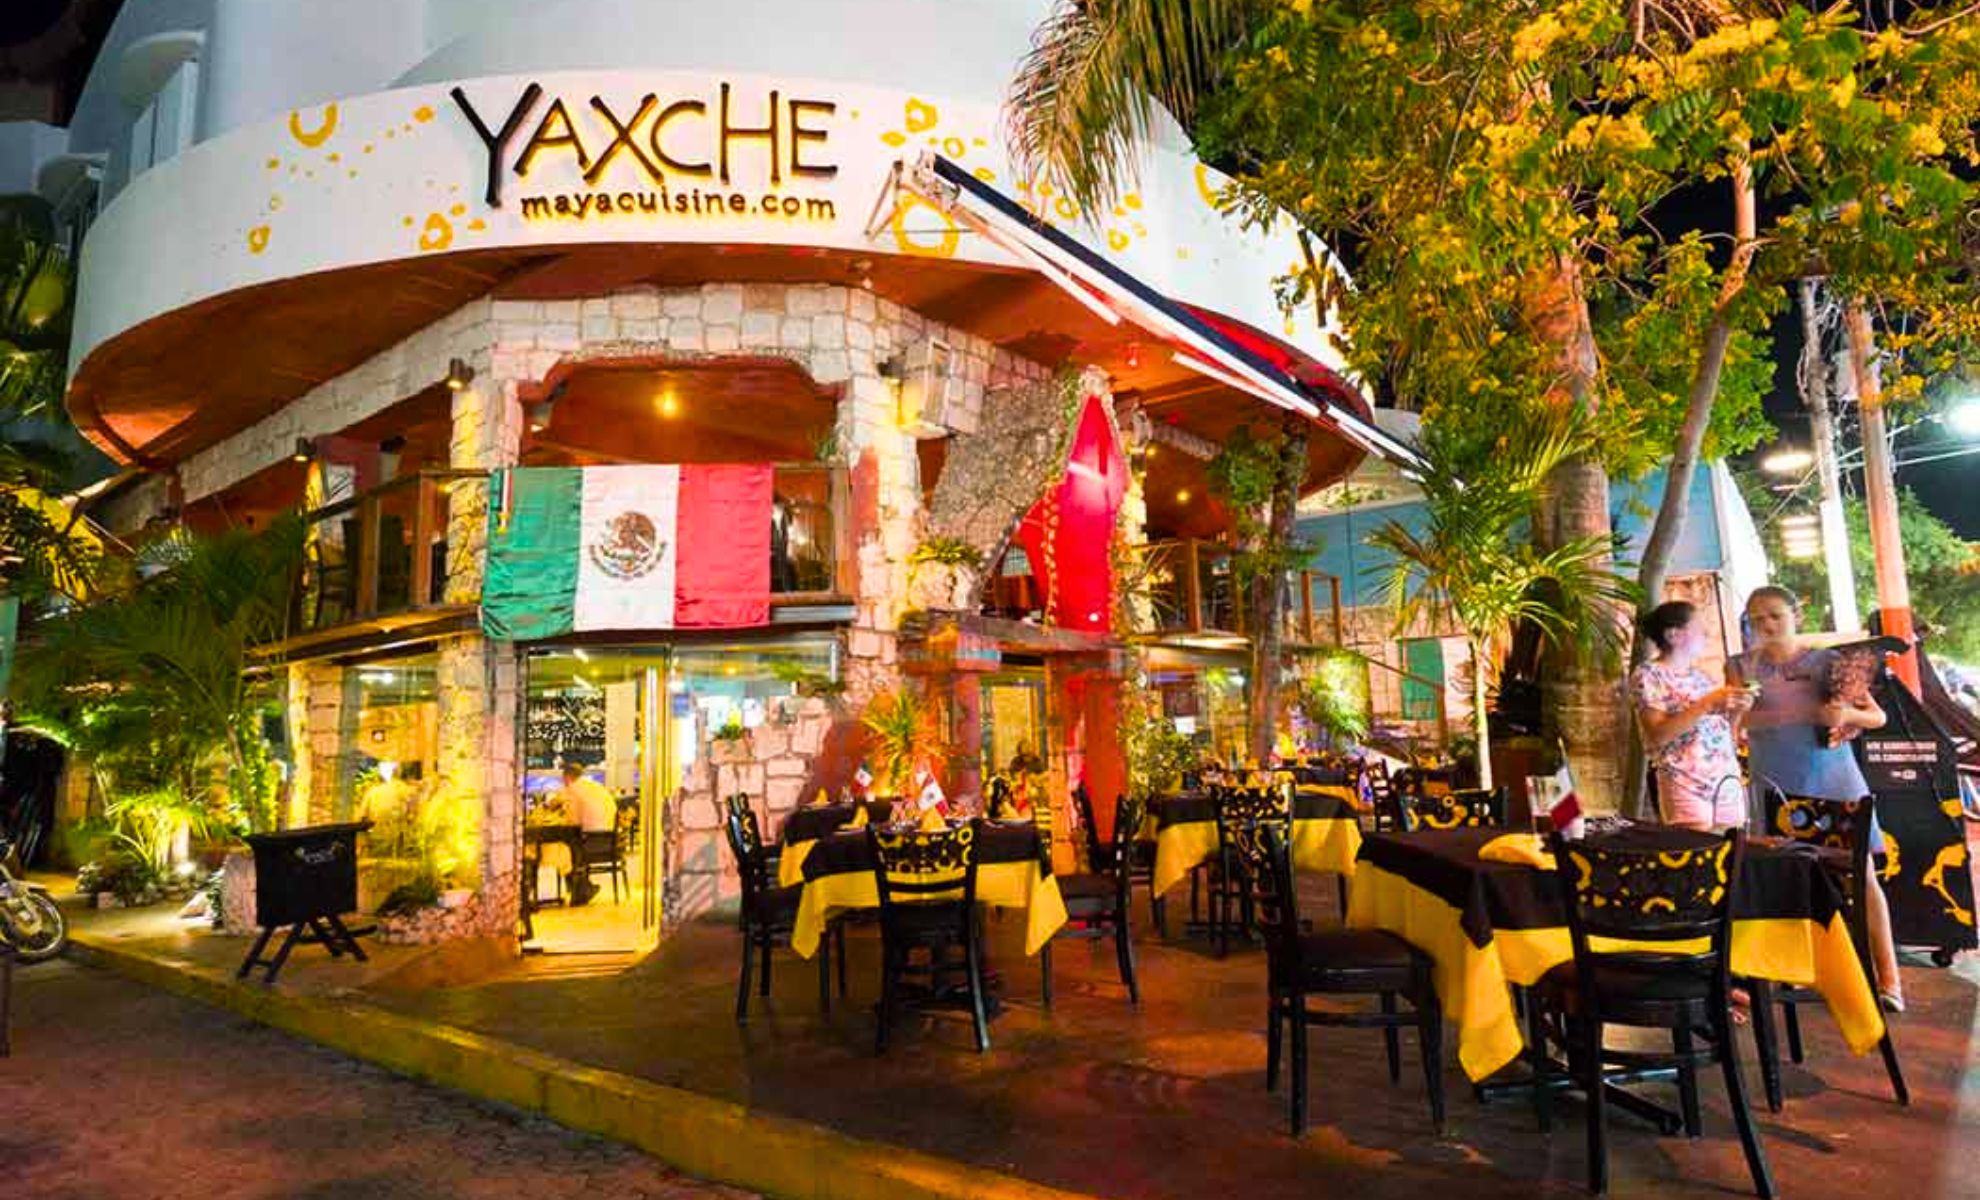 Le restaurant Yaxche maya cuisine, Playa Del Carmen, Mexique